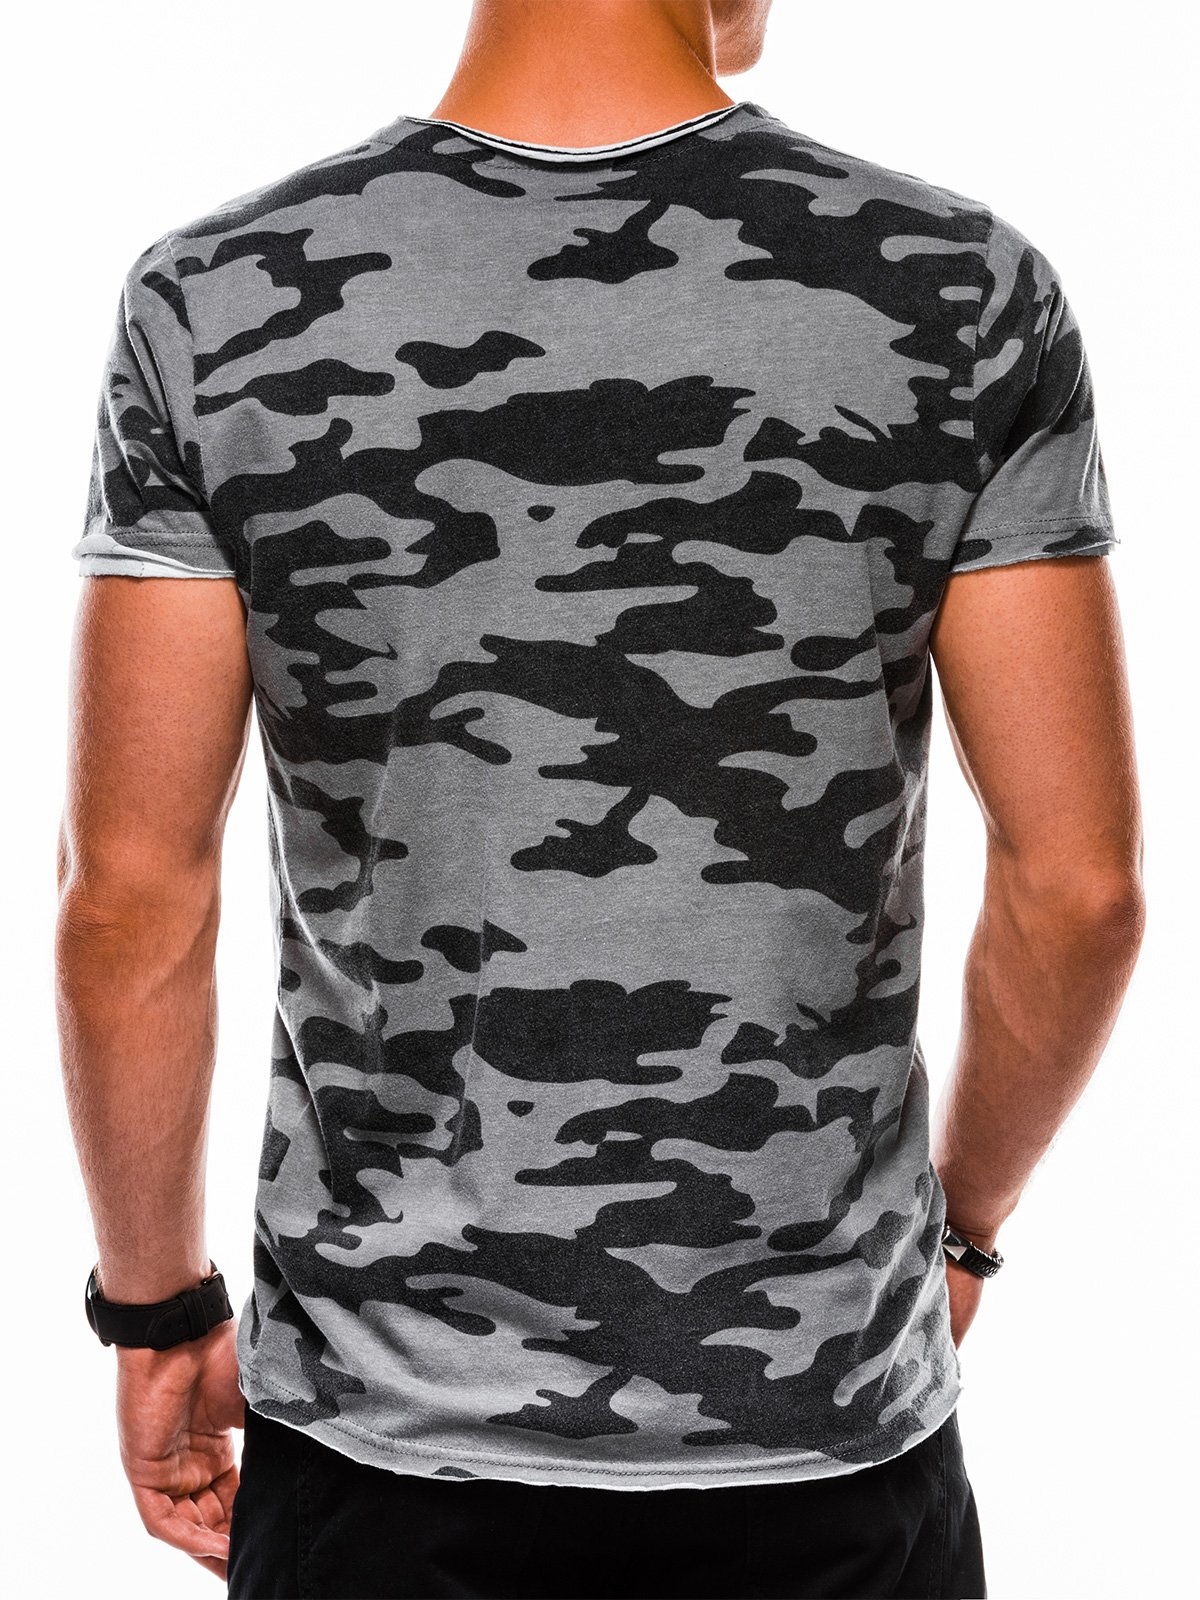 Men's printed t-shirt S1050 - grey/camo | MODONE wholesale - Clothing ...